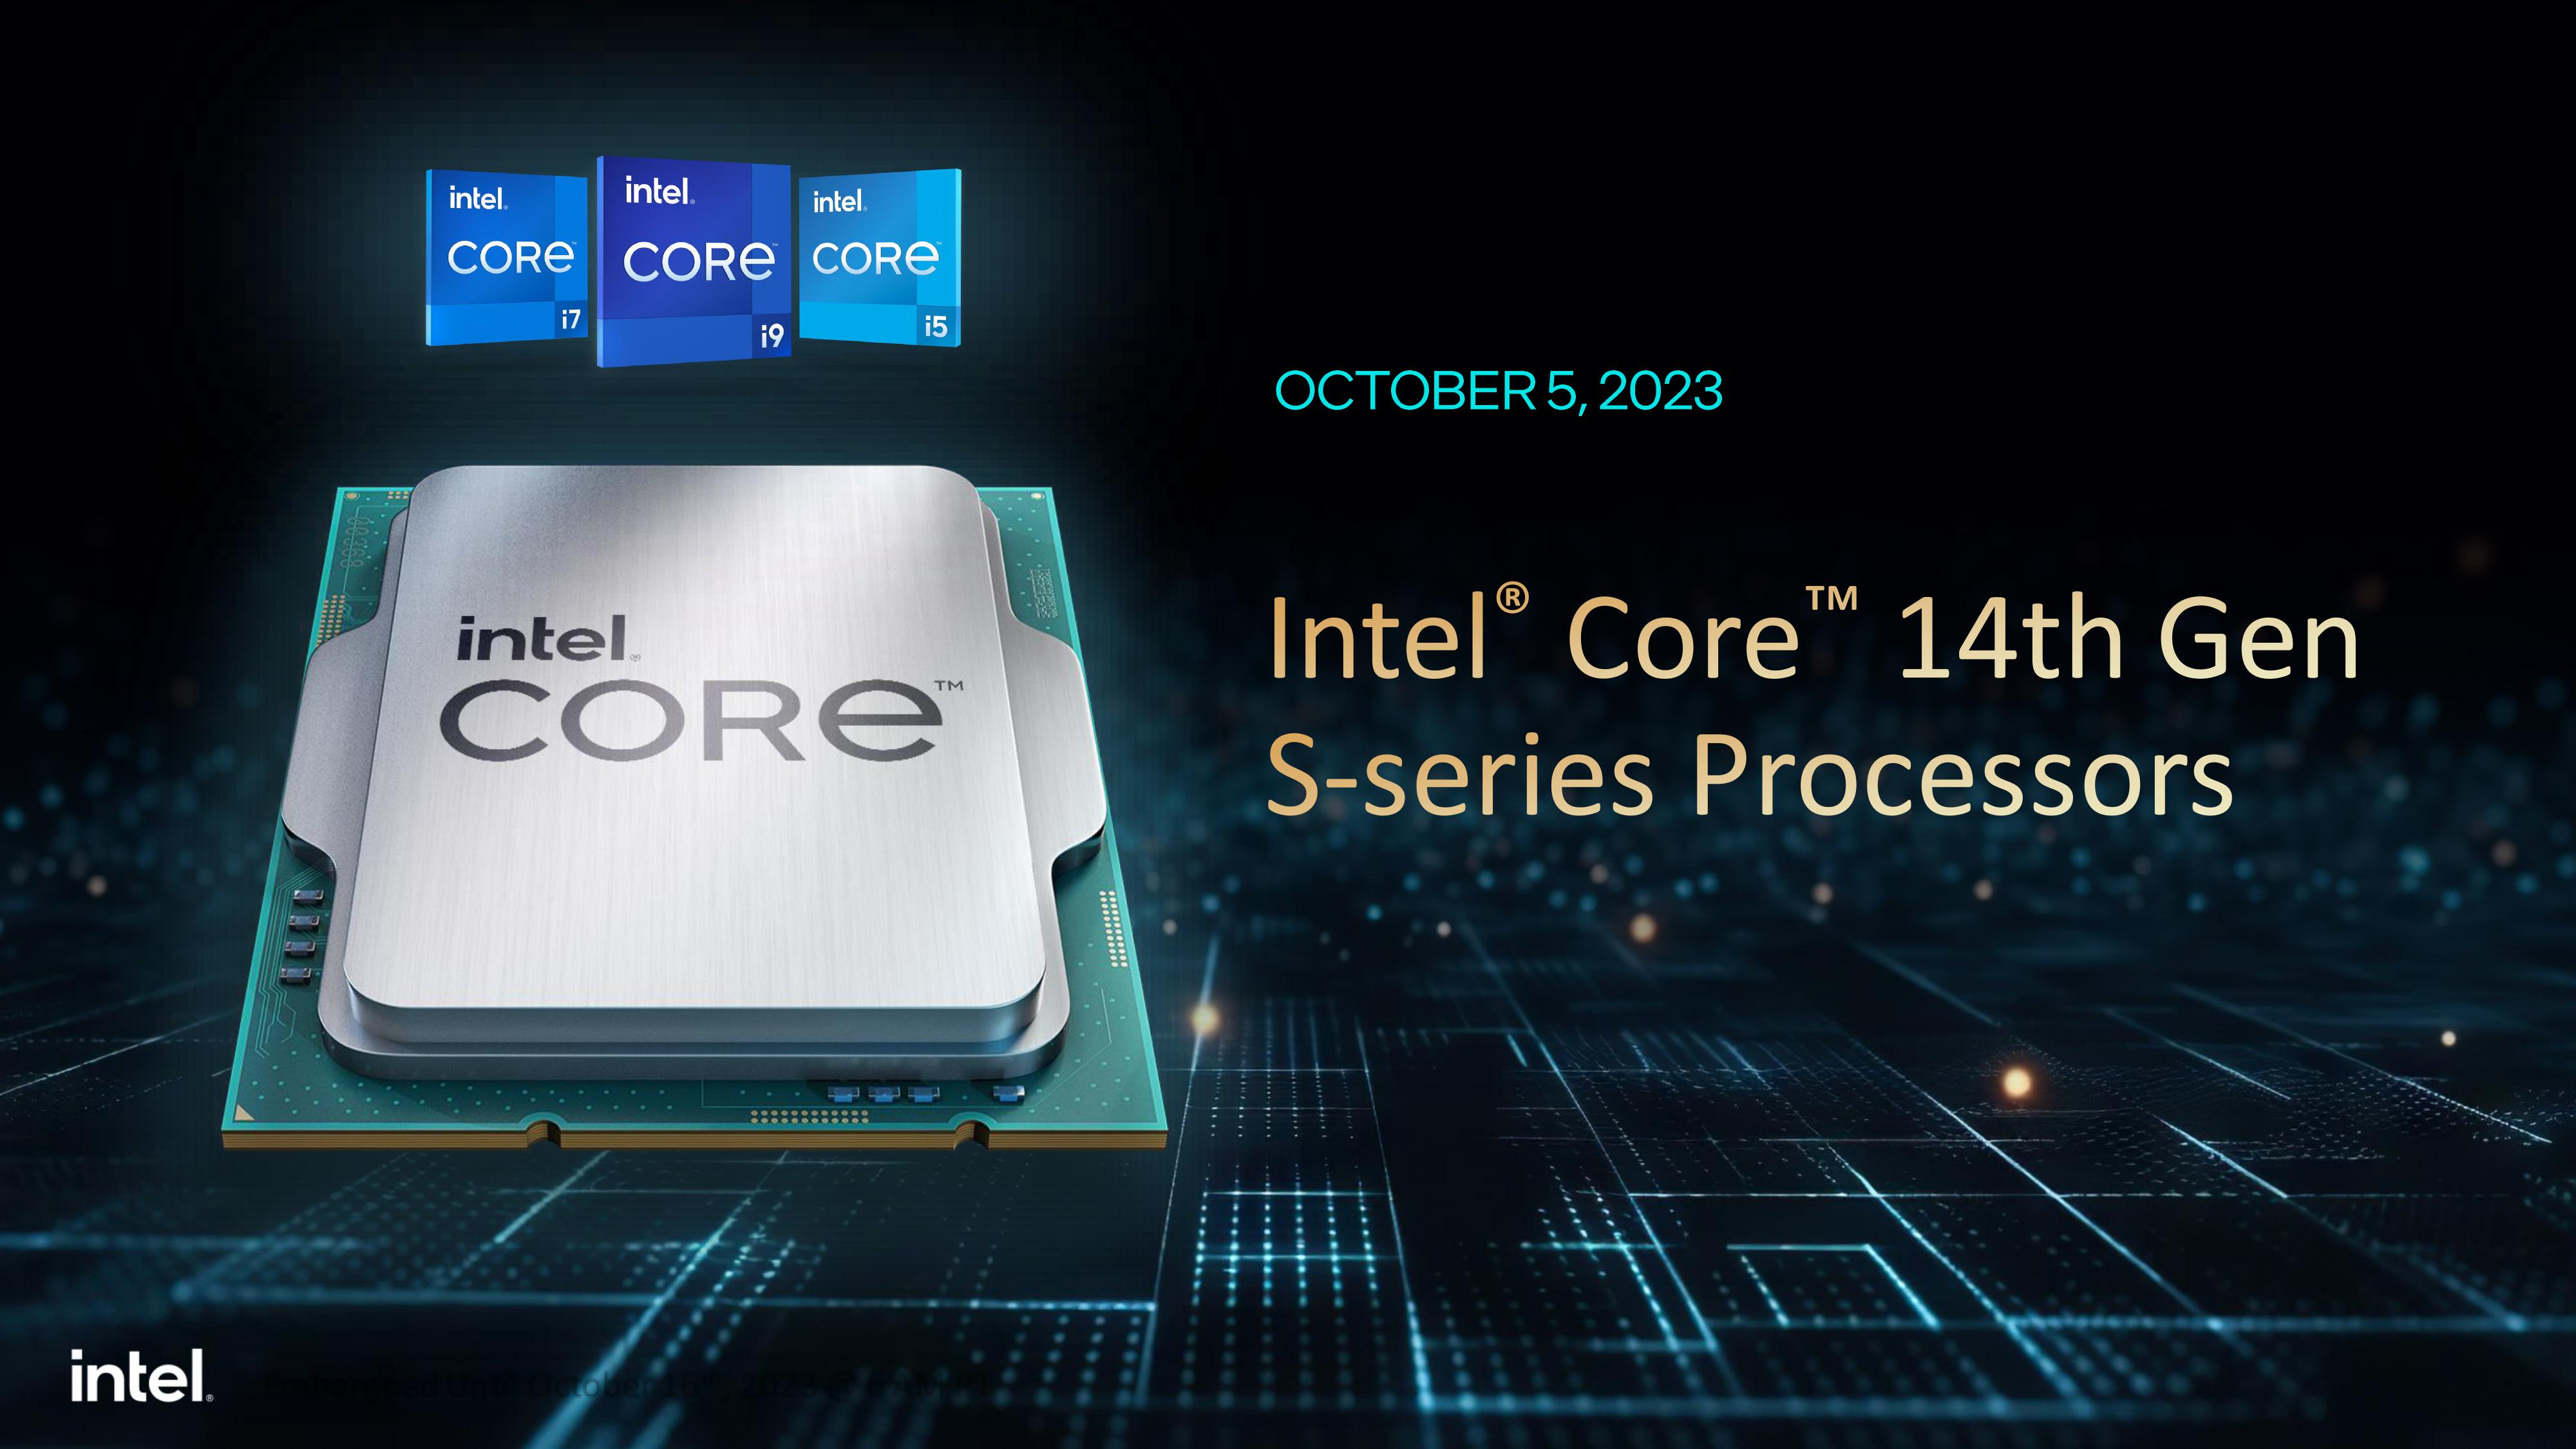 Intel Core i9-14900K: My Gaming / Productivity experience